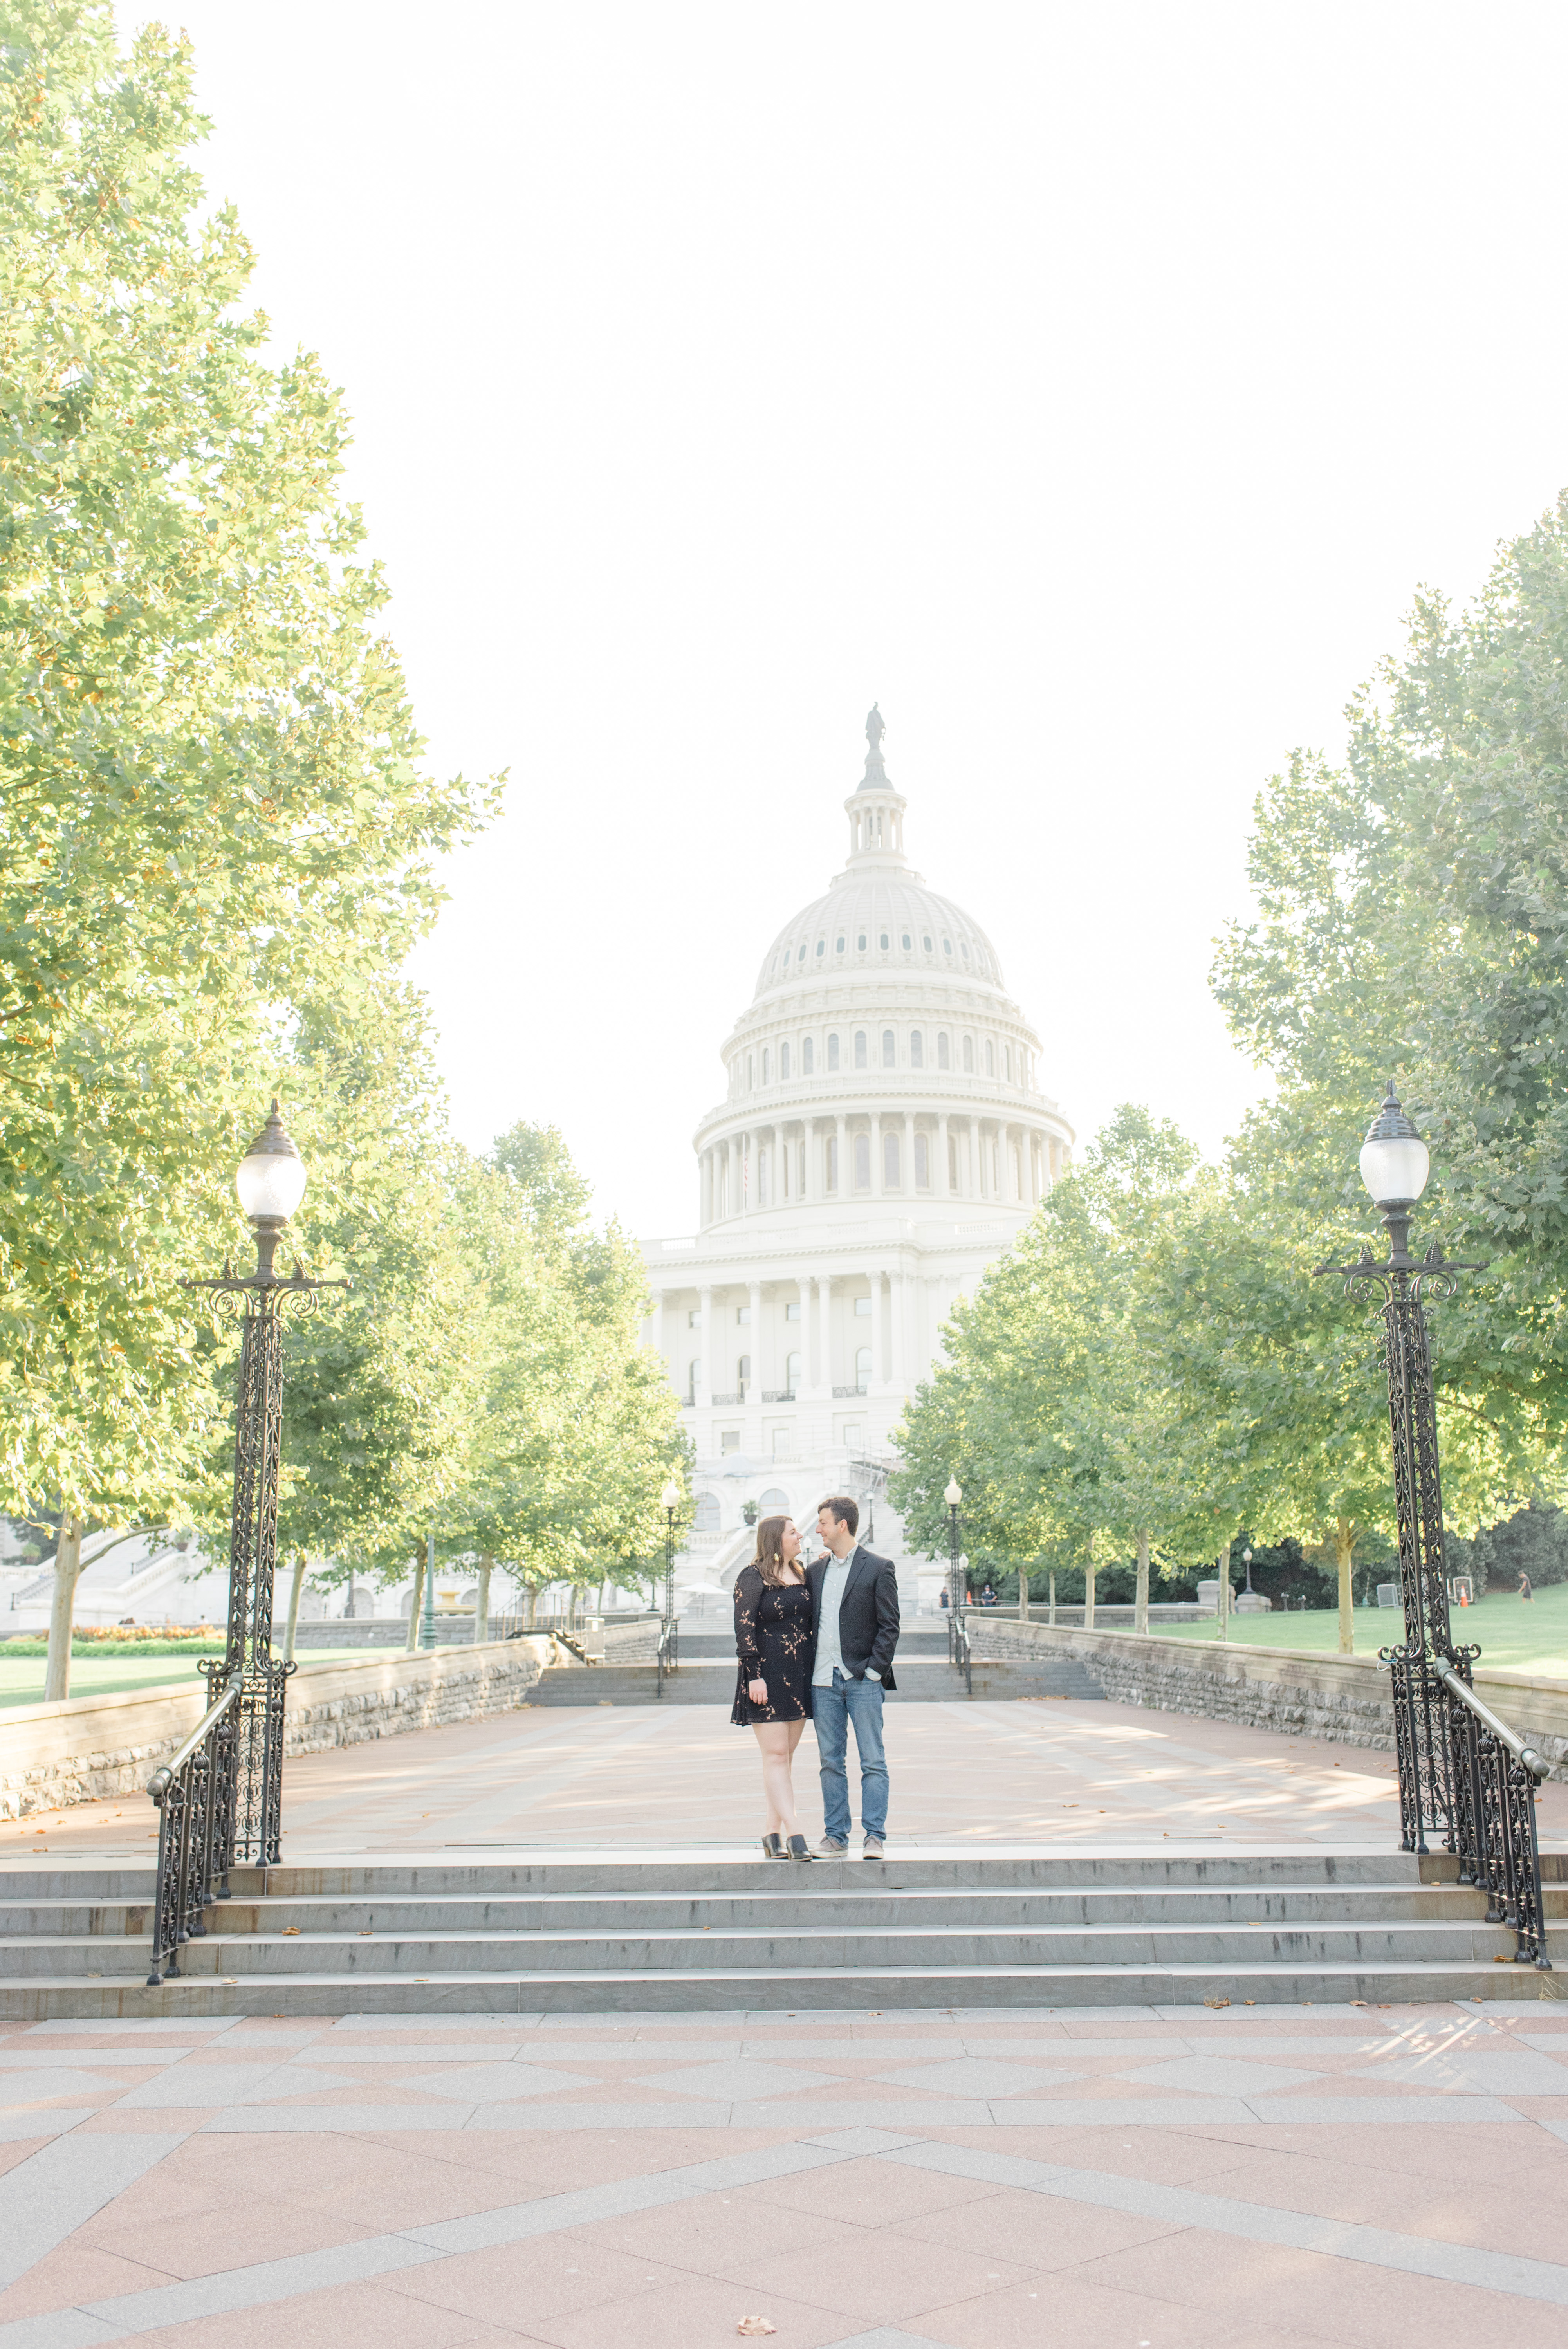 Washington DC is paradise for an engagement photographer.